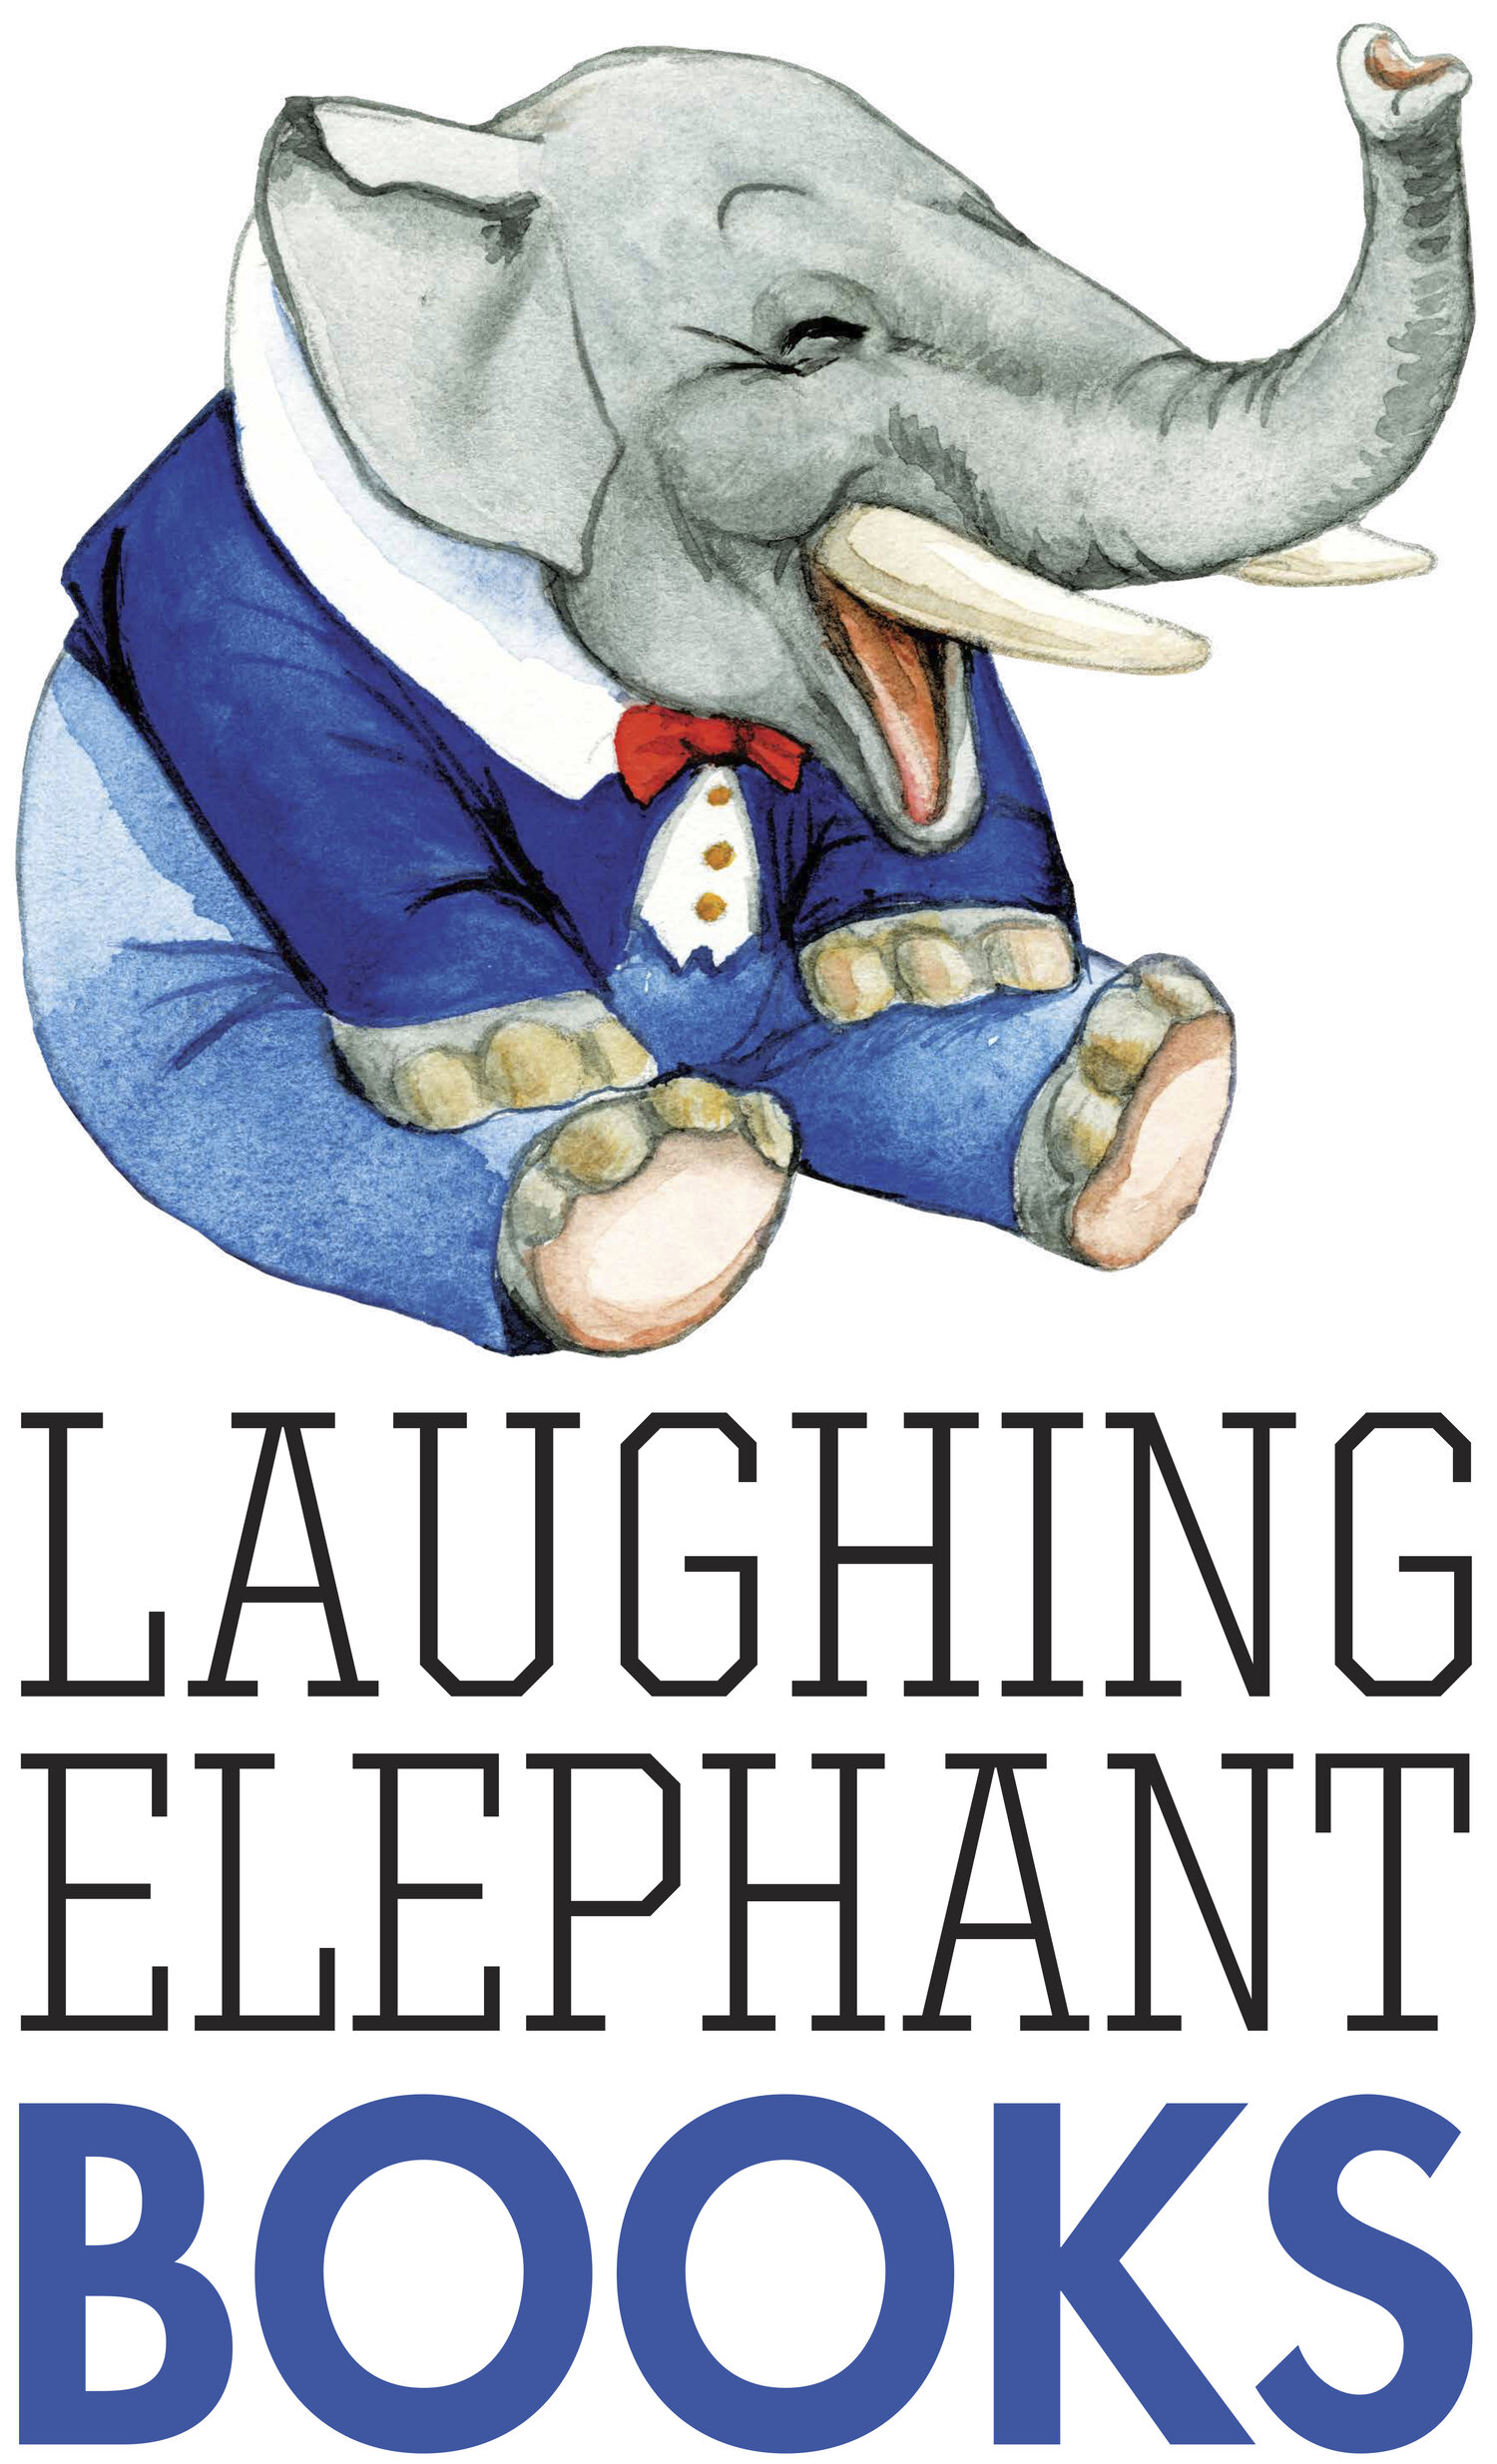 Laughing Elephant Books